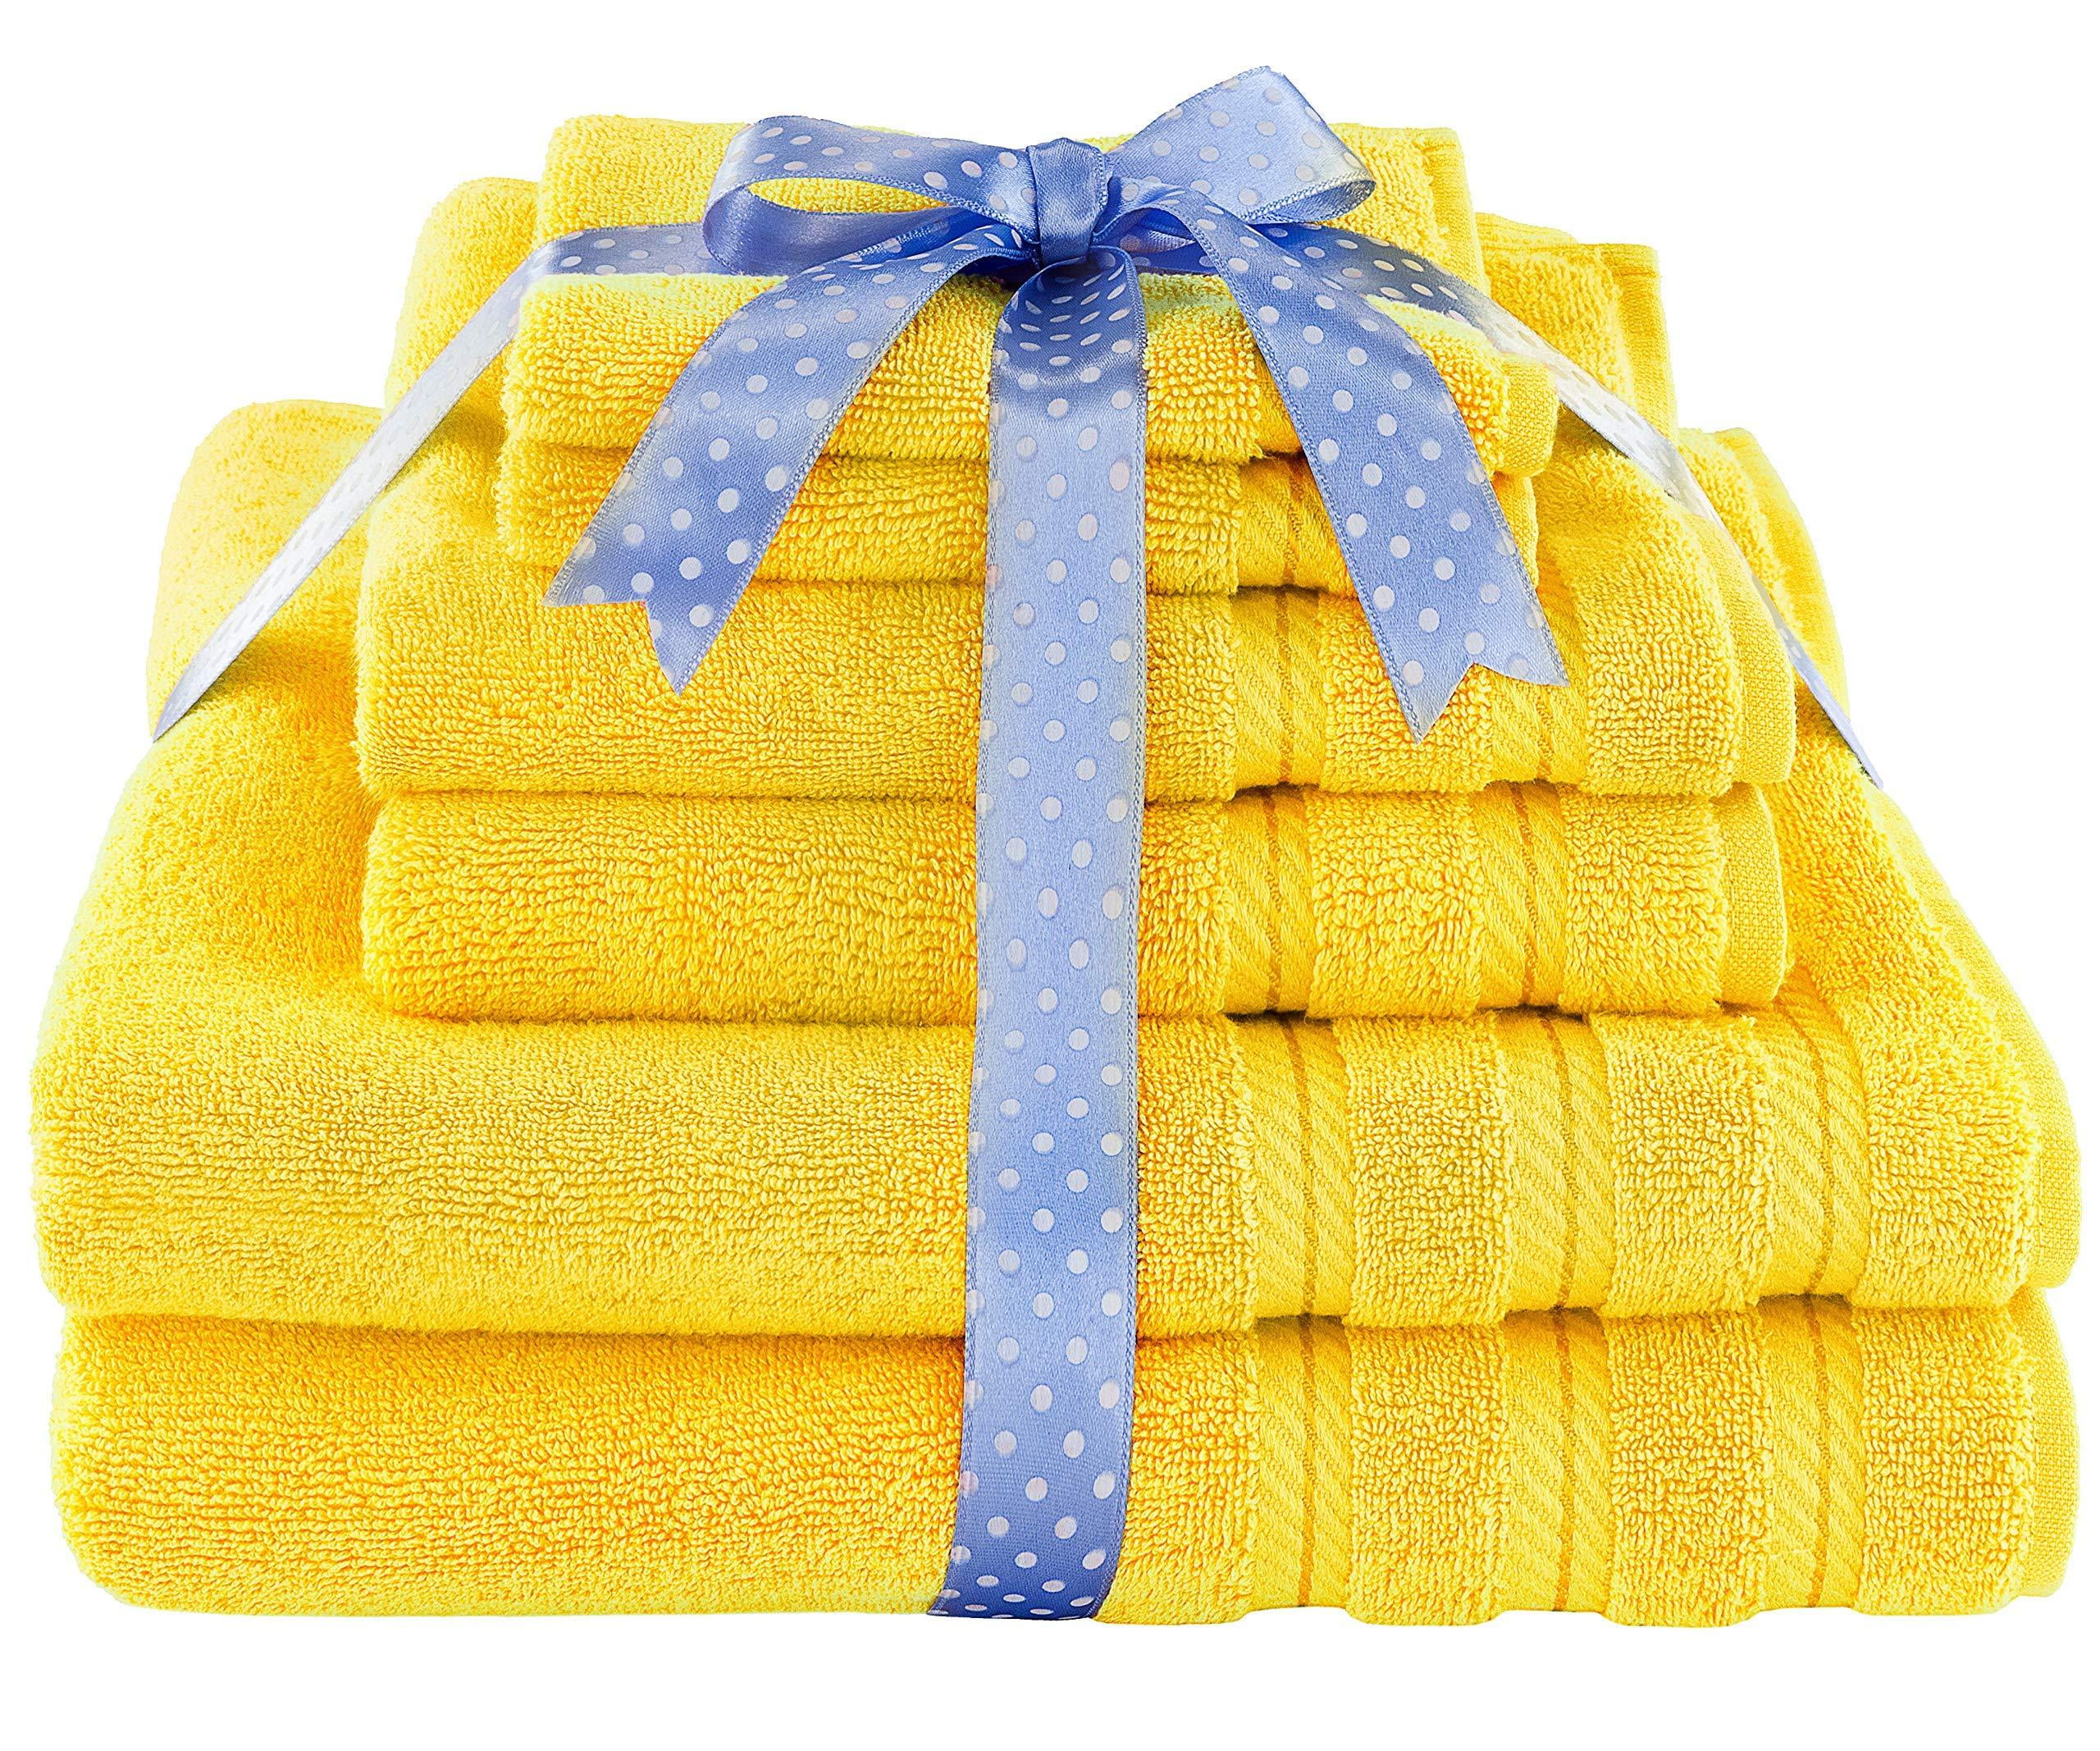 COZYART Yellow Bath Towels Set, Cotton Hotel Large Bath Towels Bulk for  Bathroom, Thick Bathroom Towels Set of 6 with 2 Bath Towels, 2 Hand Towels,  2